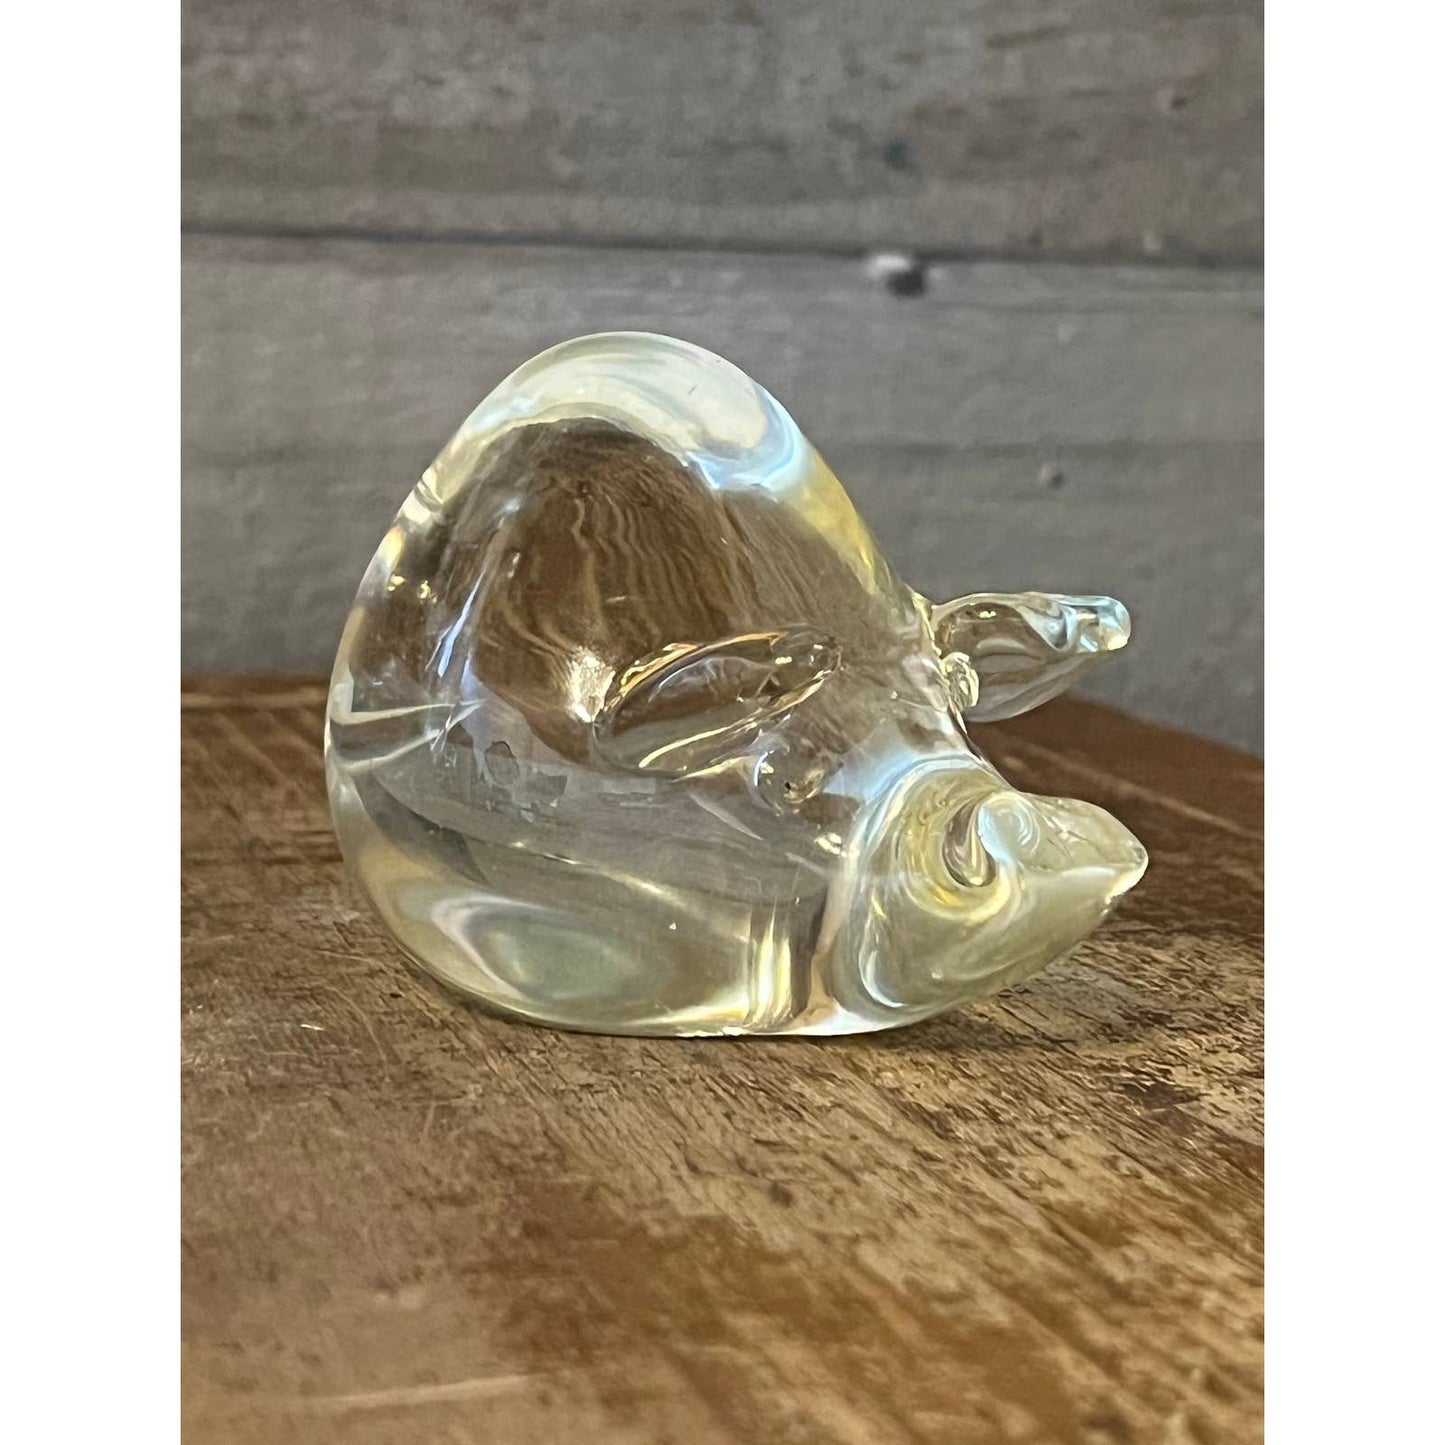 Petite clear glass blown pig figurine